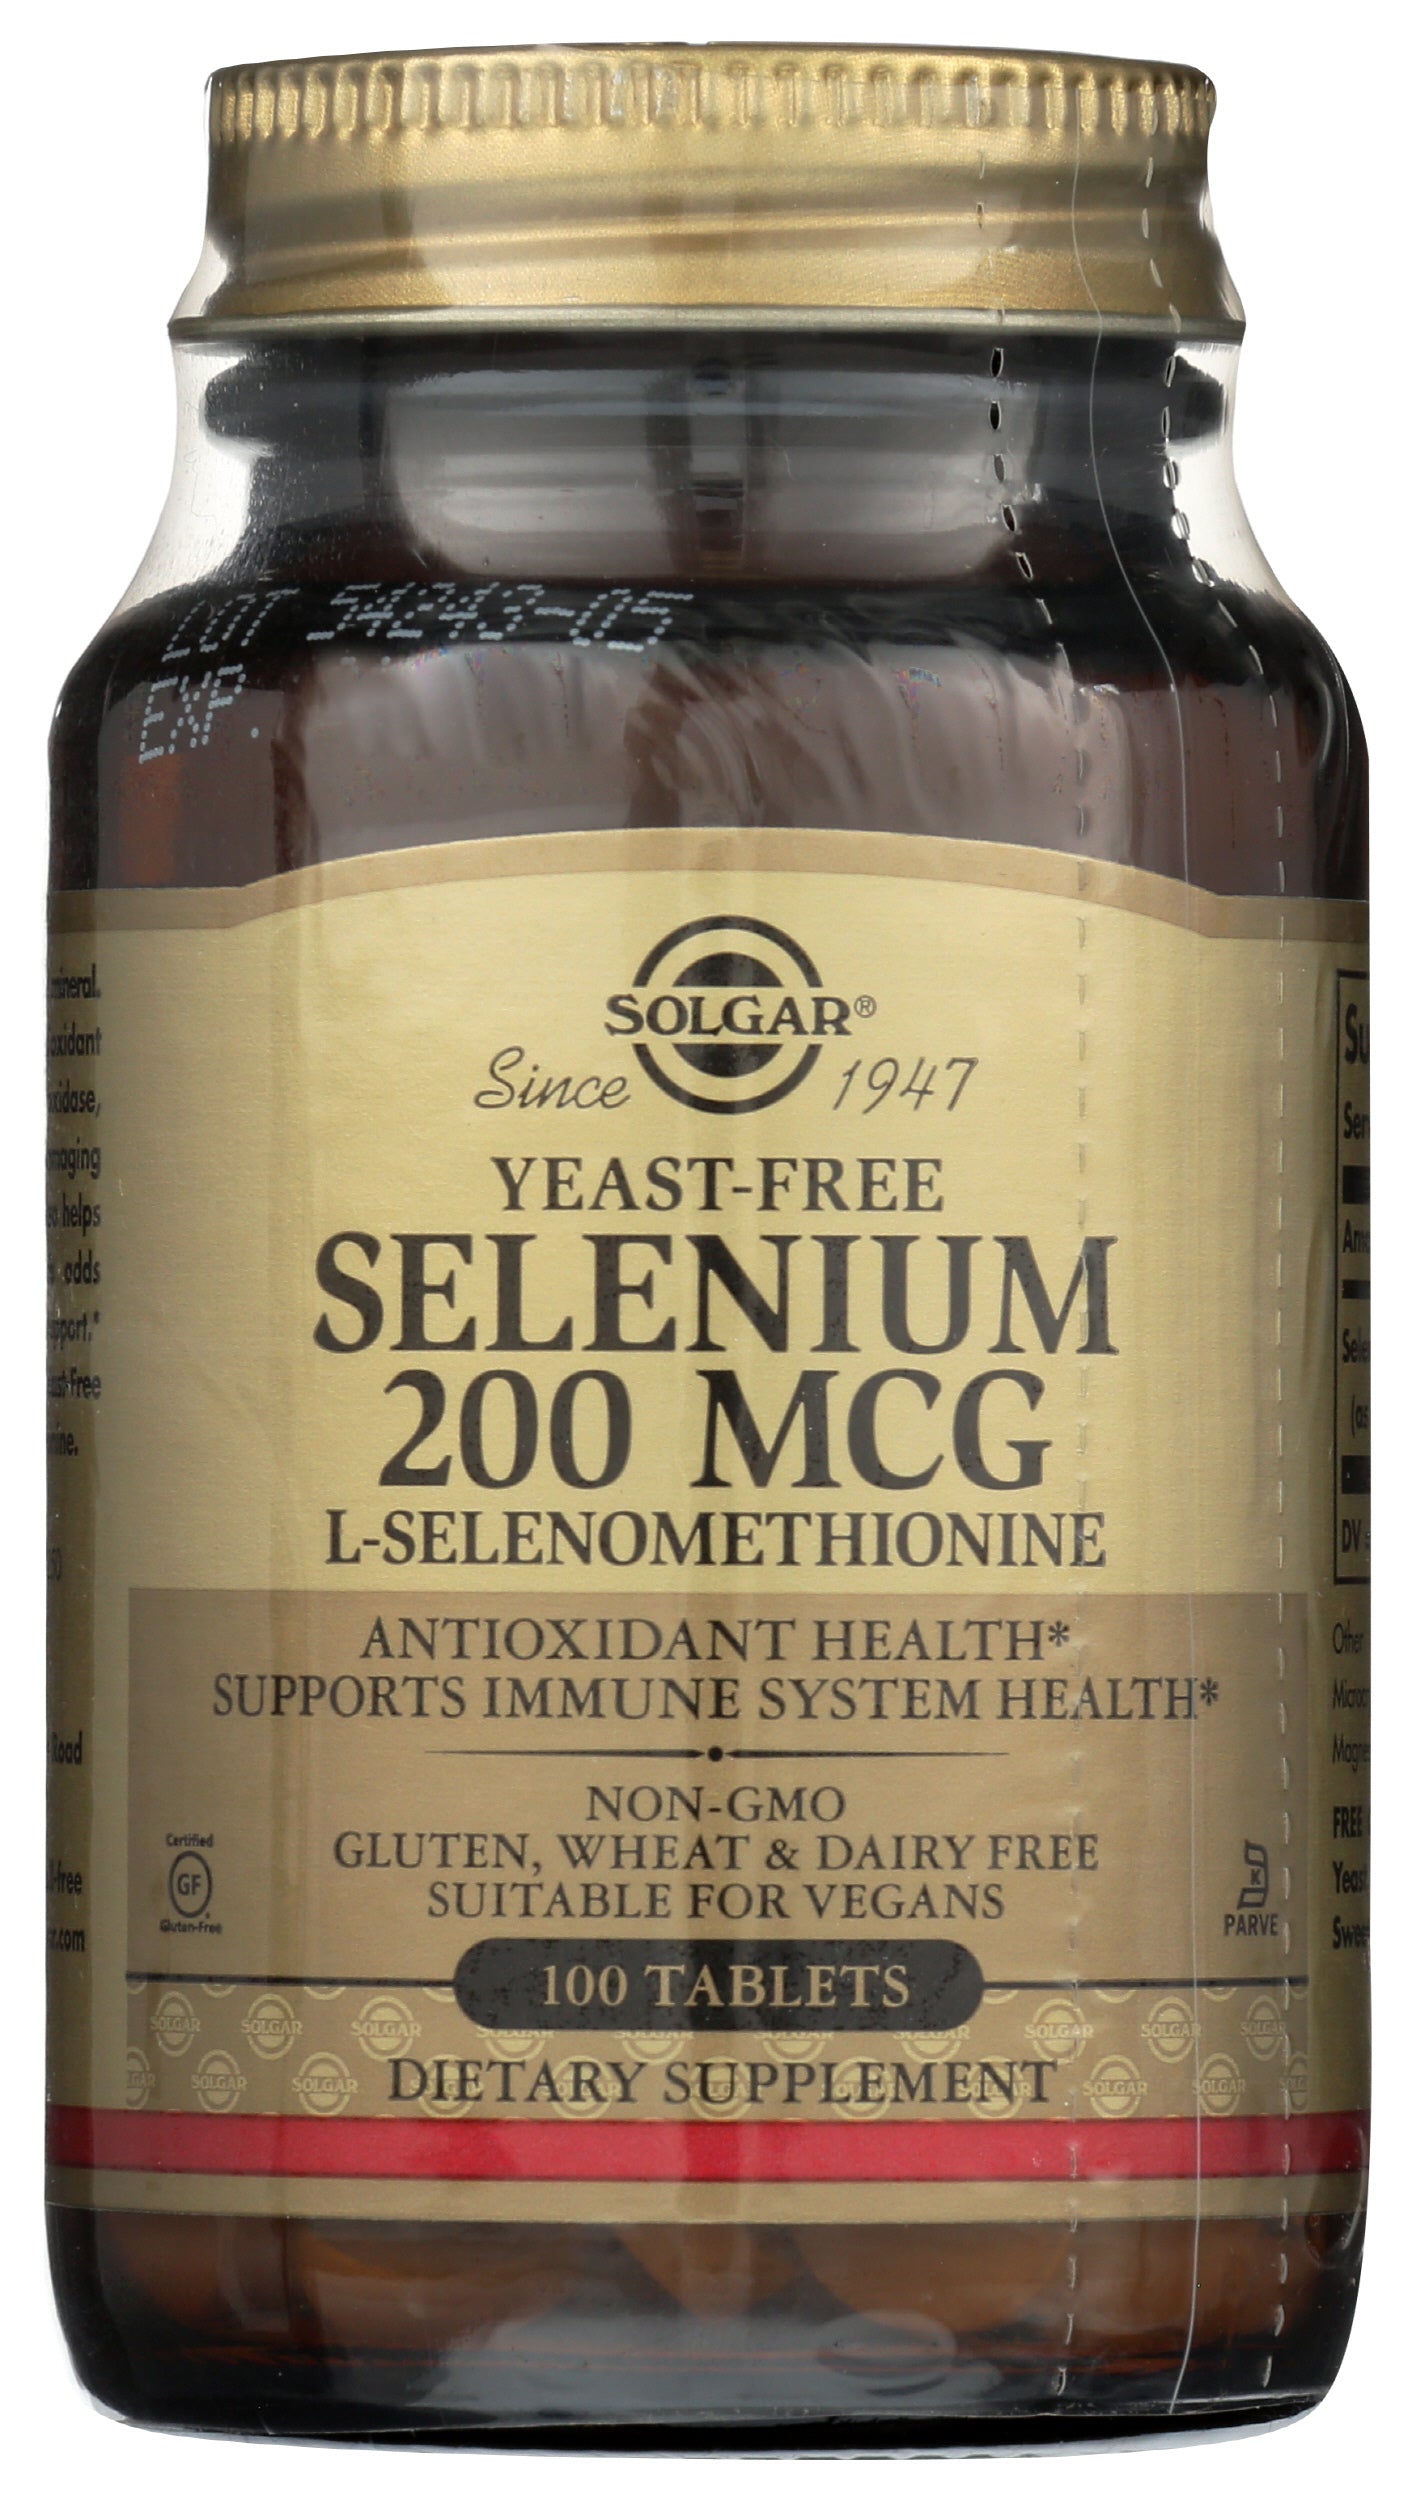 Solgar Yeast-Free Selenium 200mcg 100 Tablets Front of Bottle